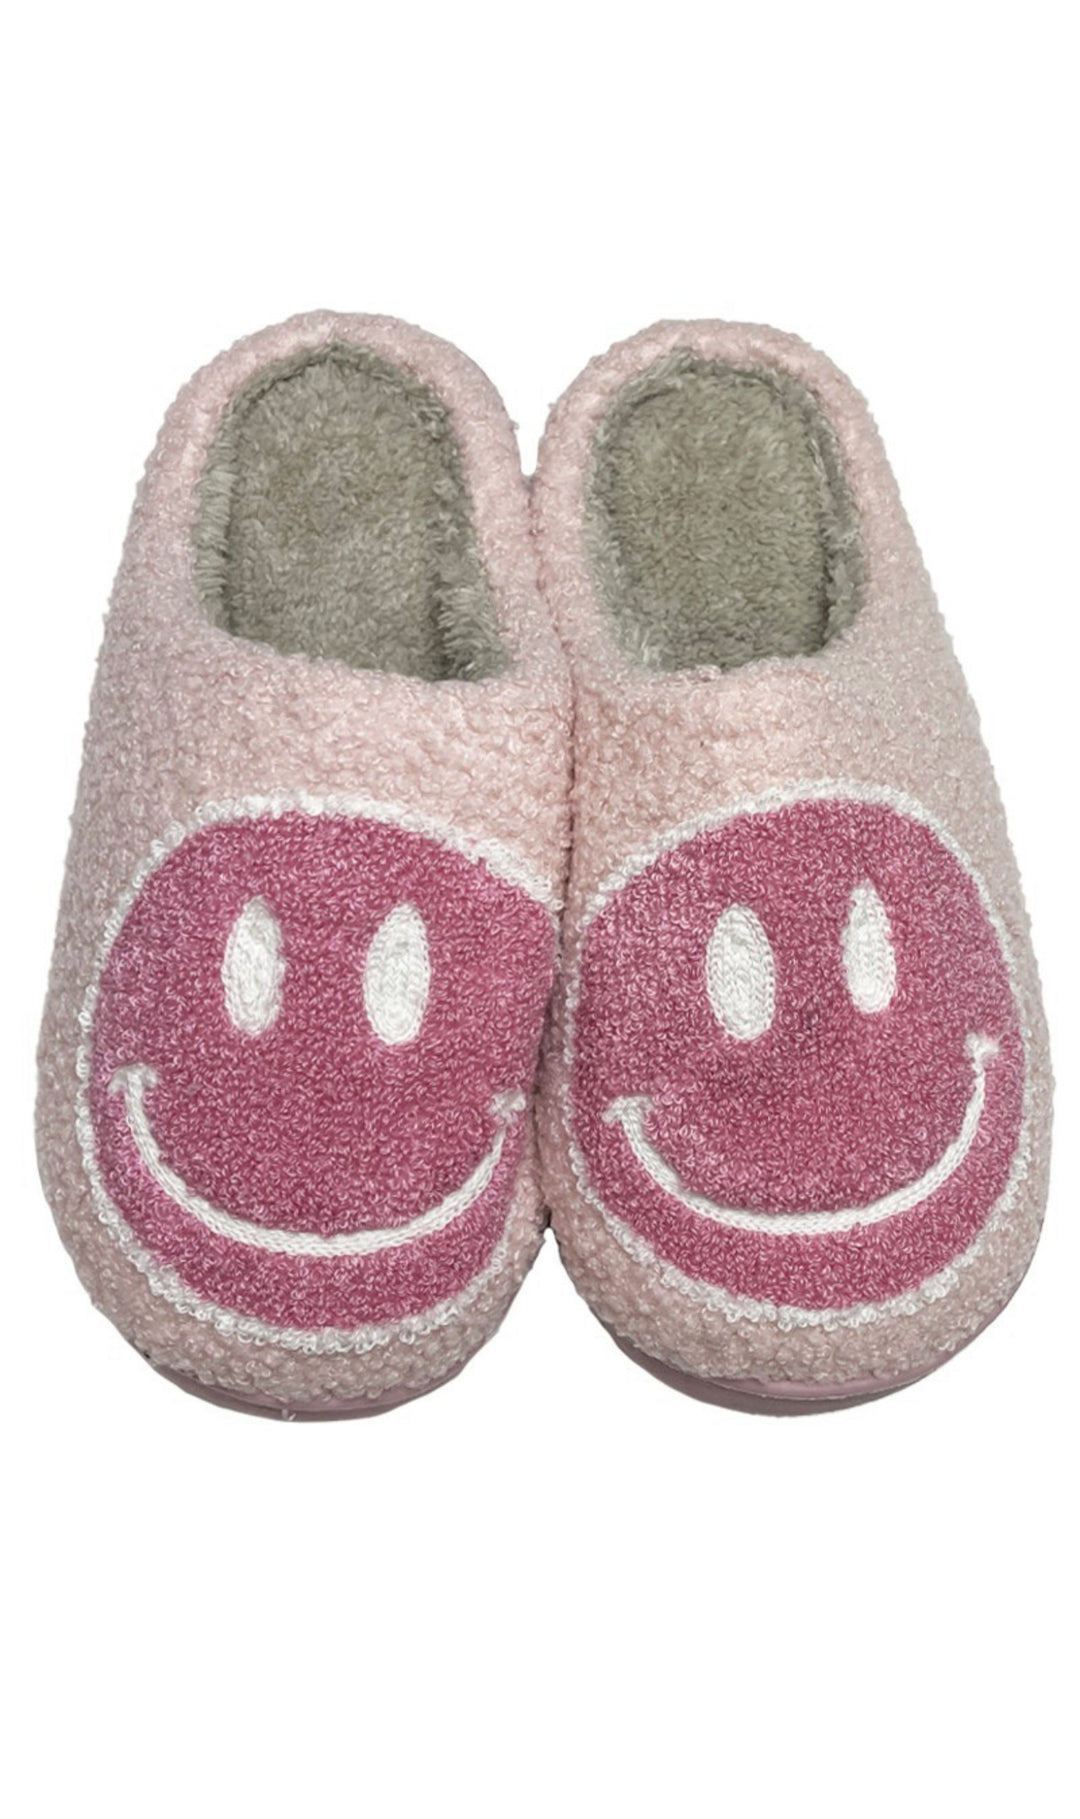 Vintage Light Pink Smiley Face Slippers